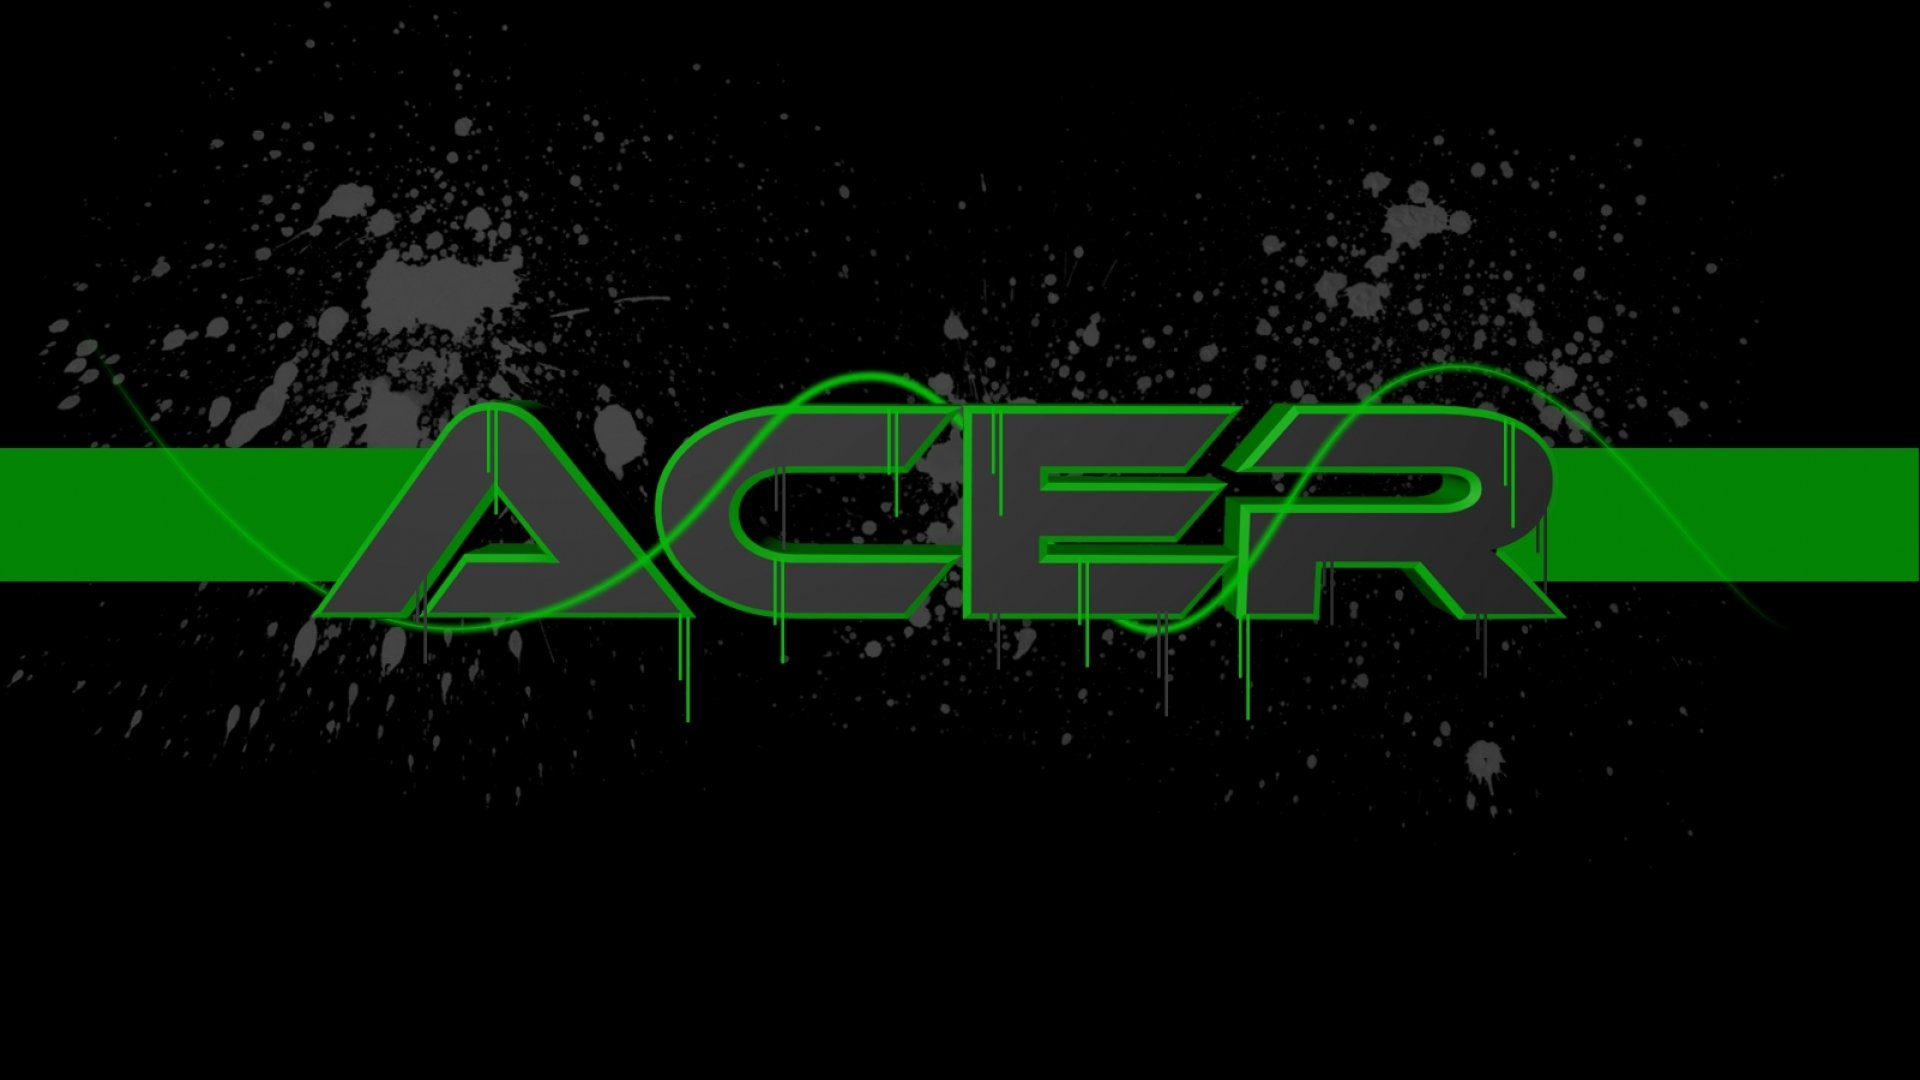 Acer Puter Wallpaper Background For